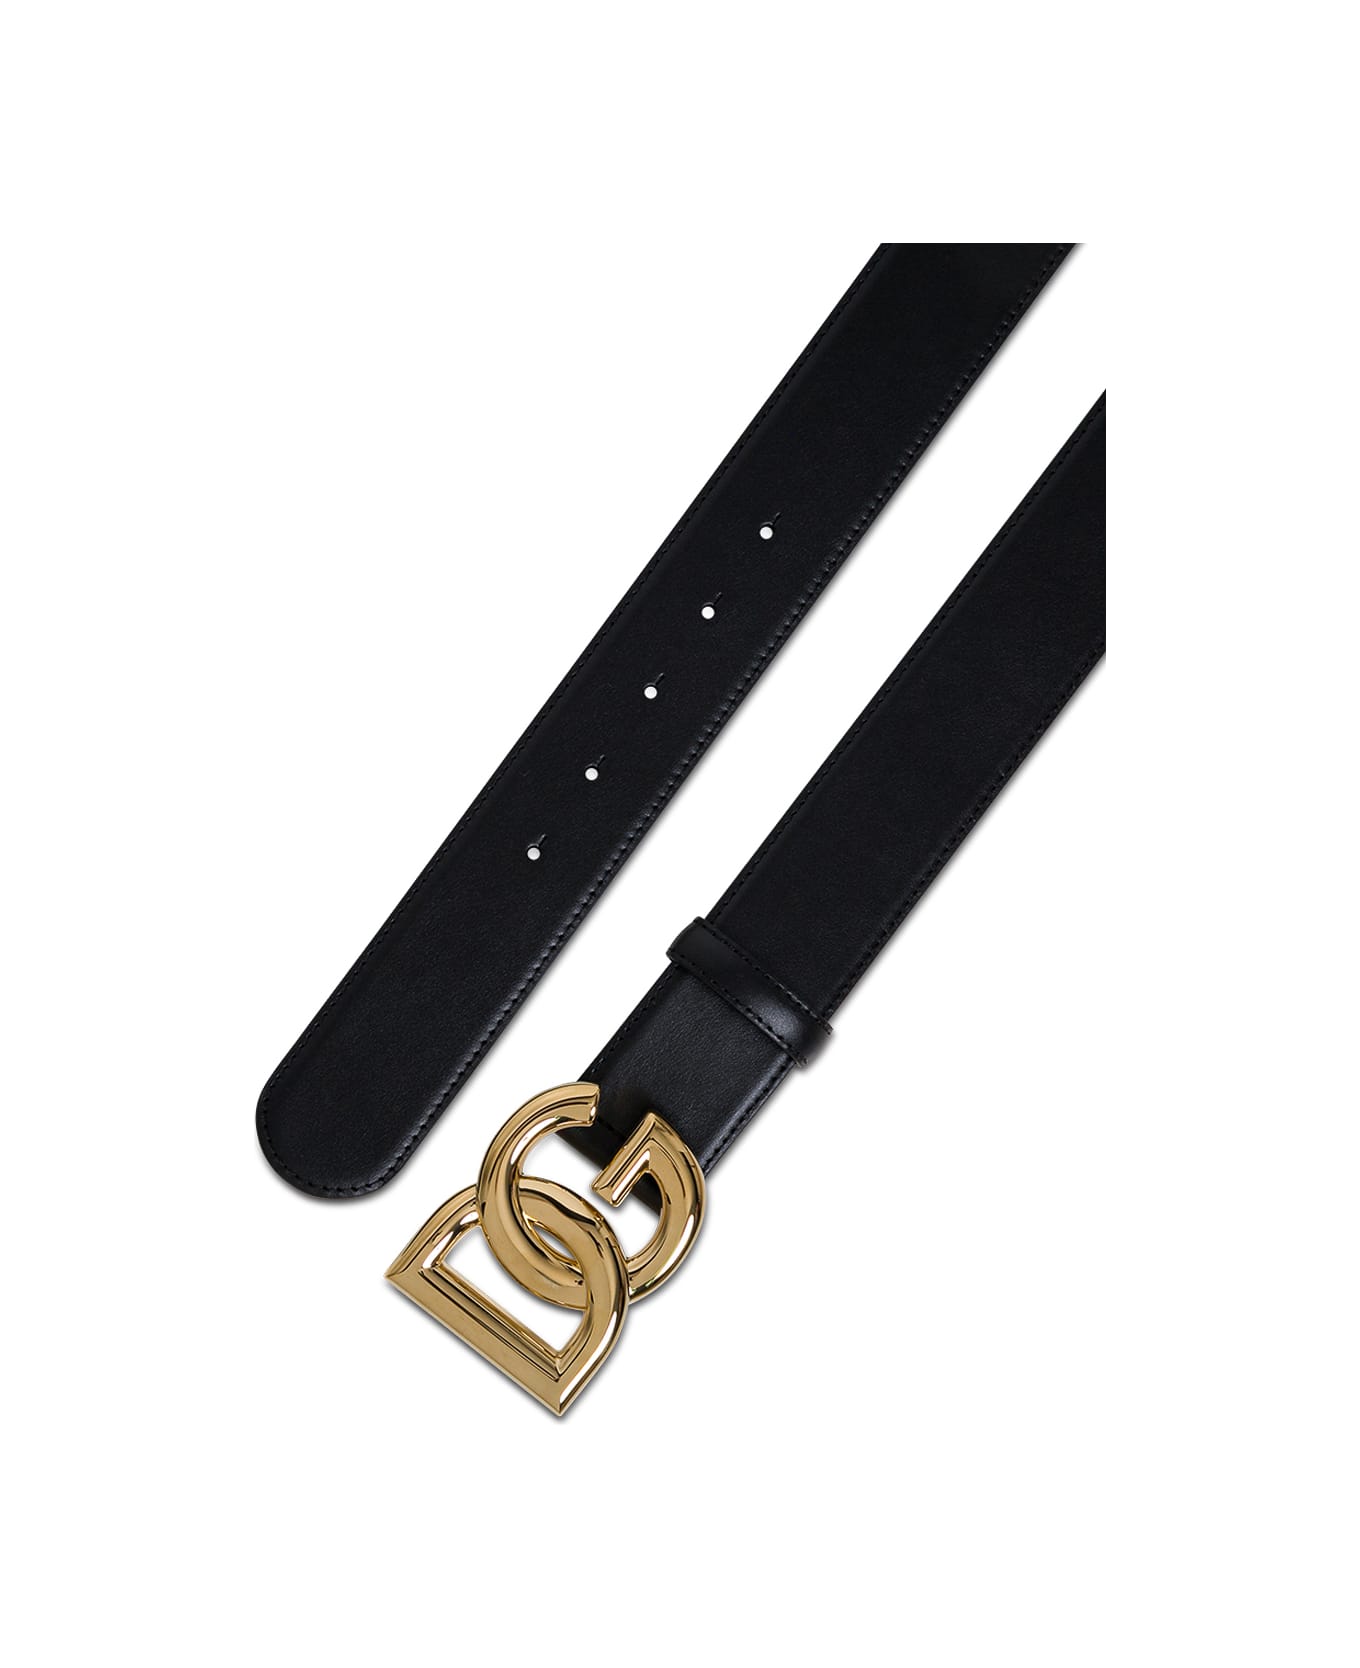 Dolce & Gabbana Woman 's Black Leather Belt With Logo Buckle - Black